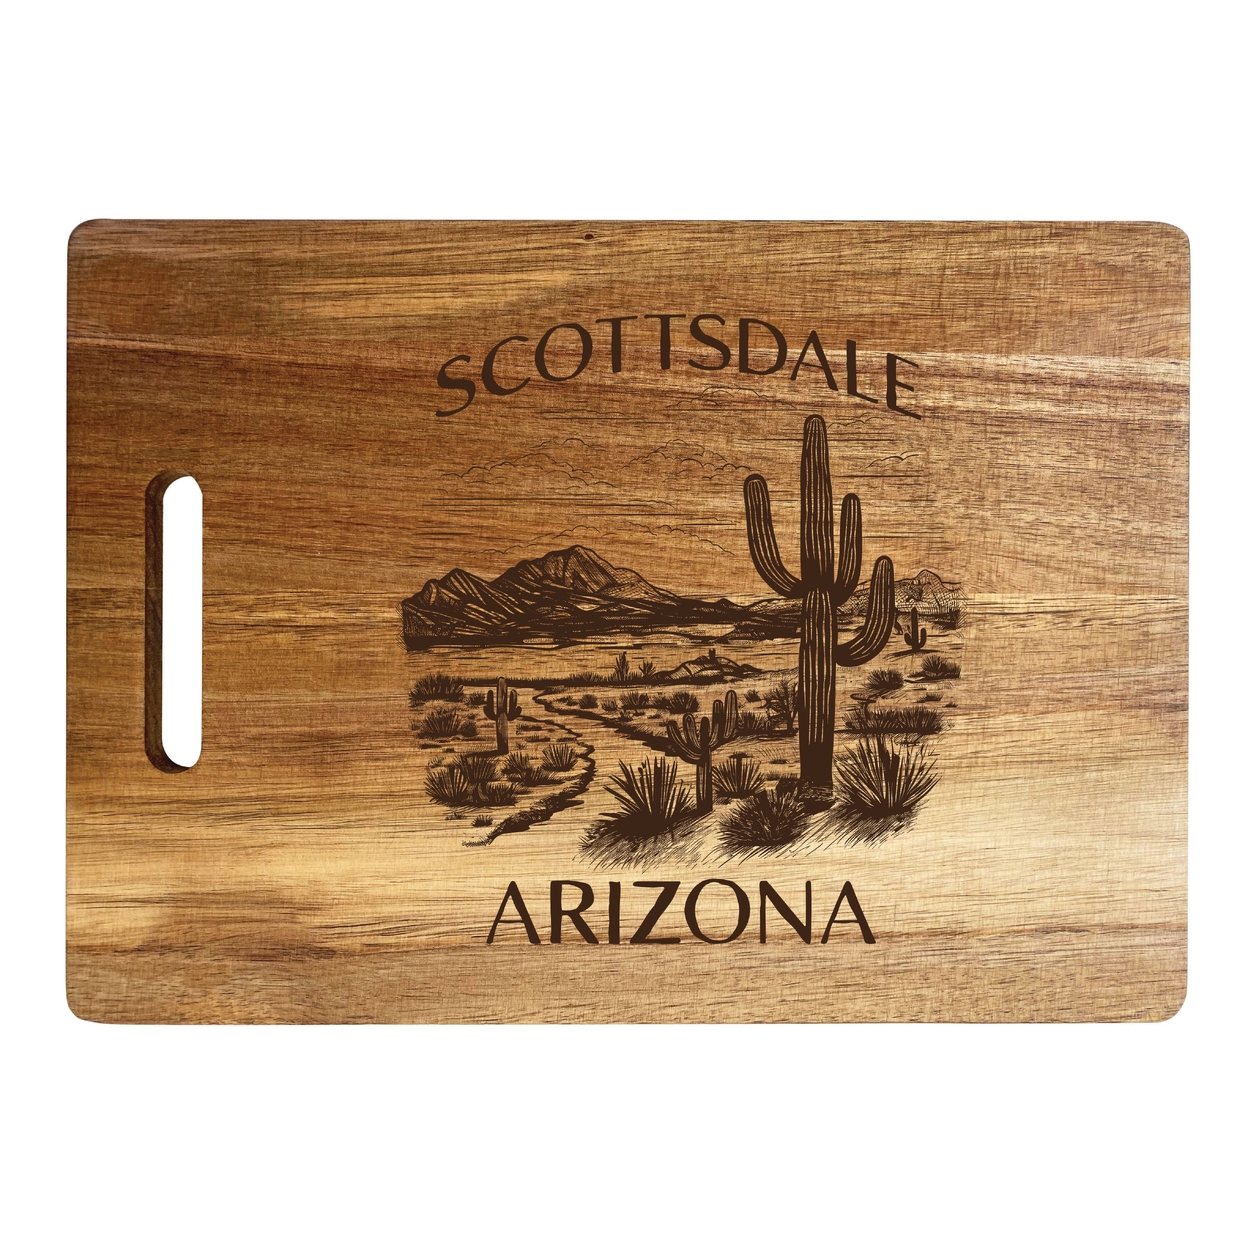 Scottsdale Arizona Souvenir Wooden Cutting Board 10 X 14